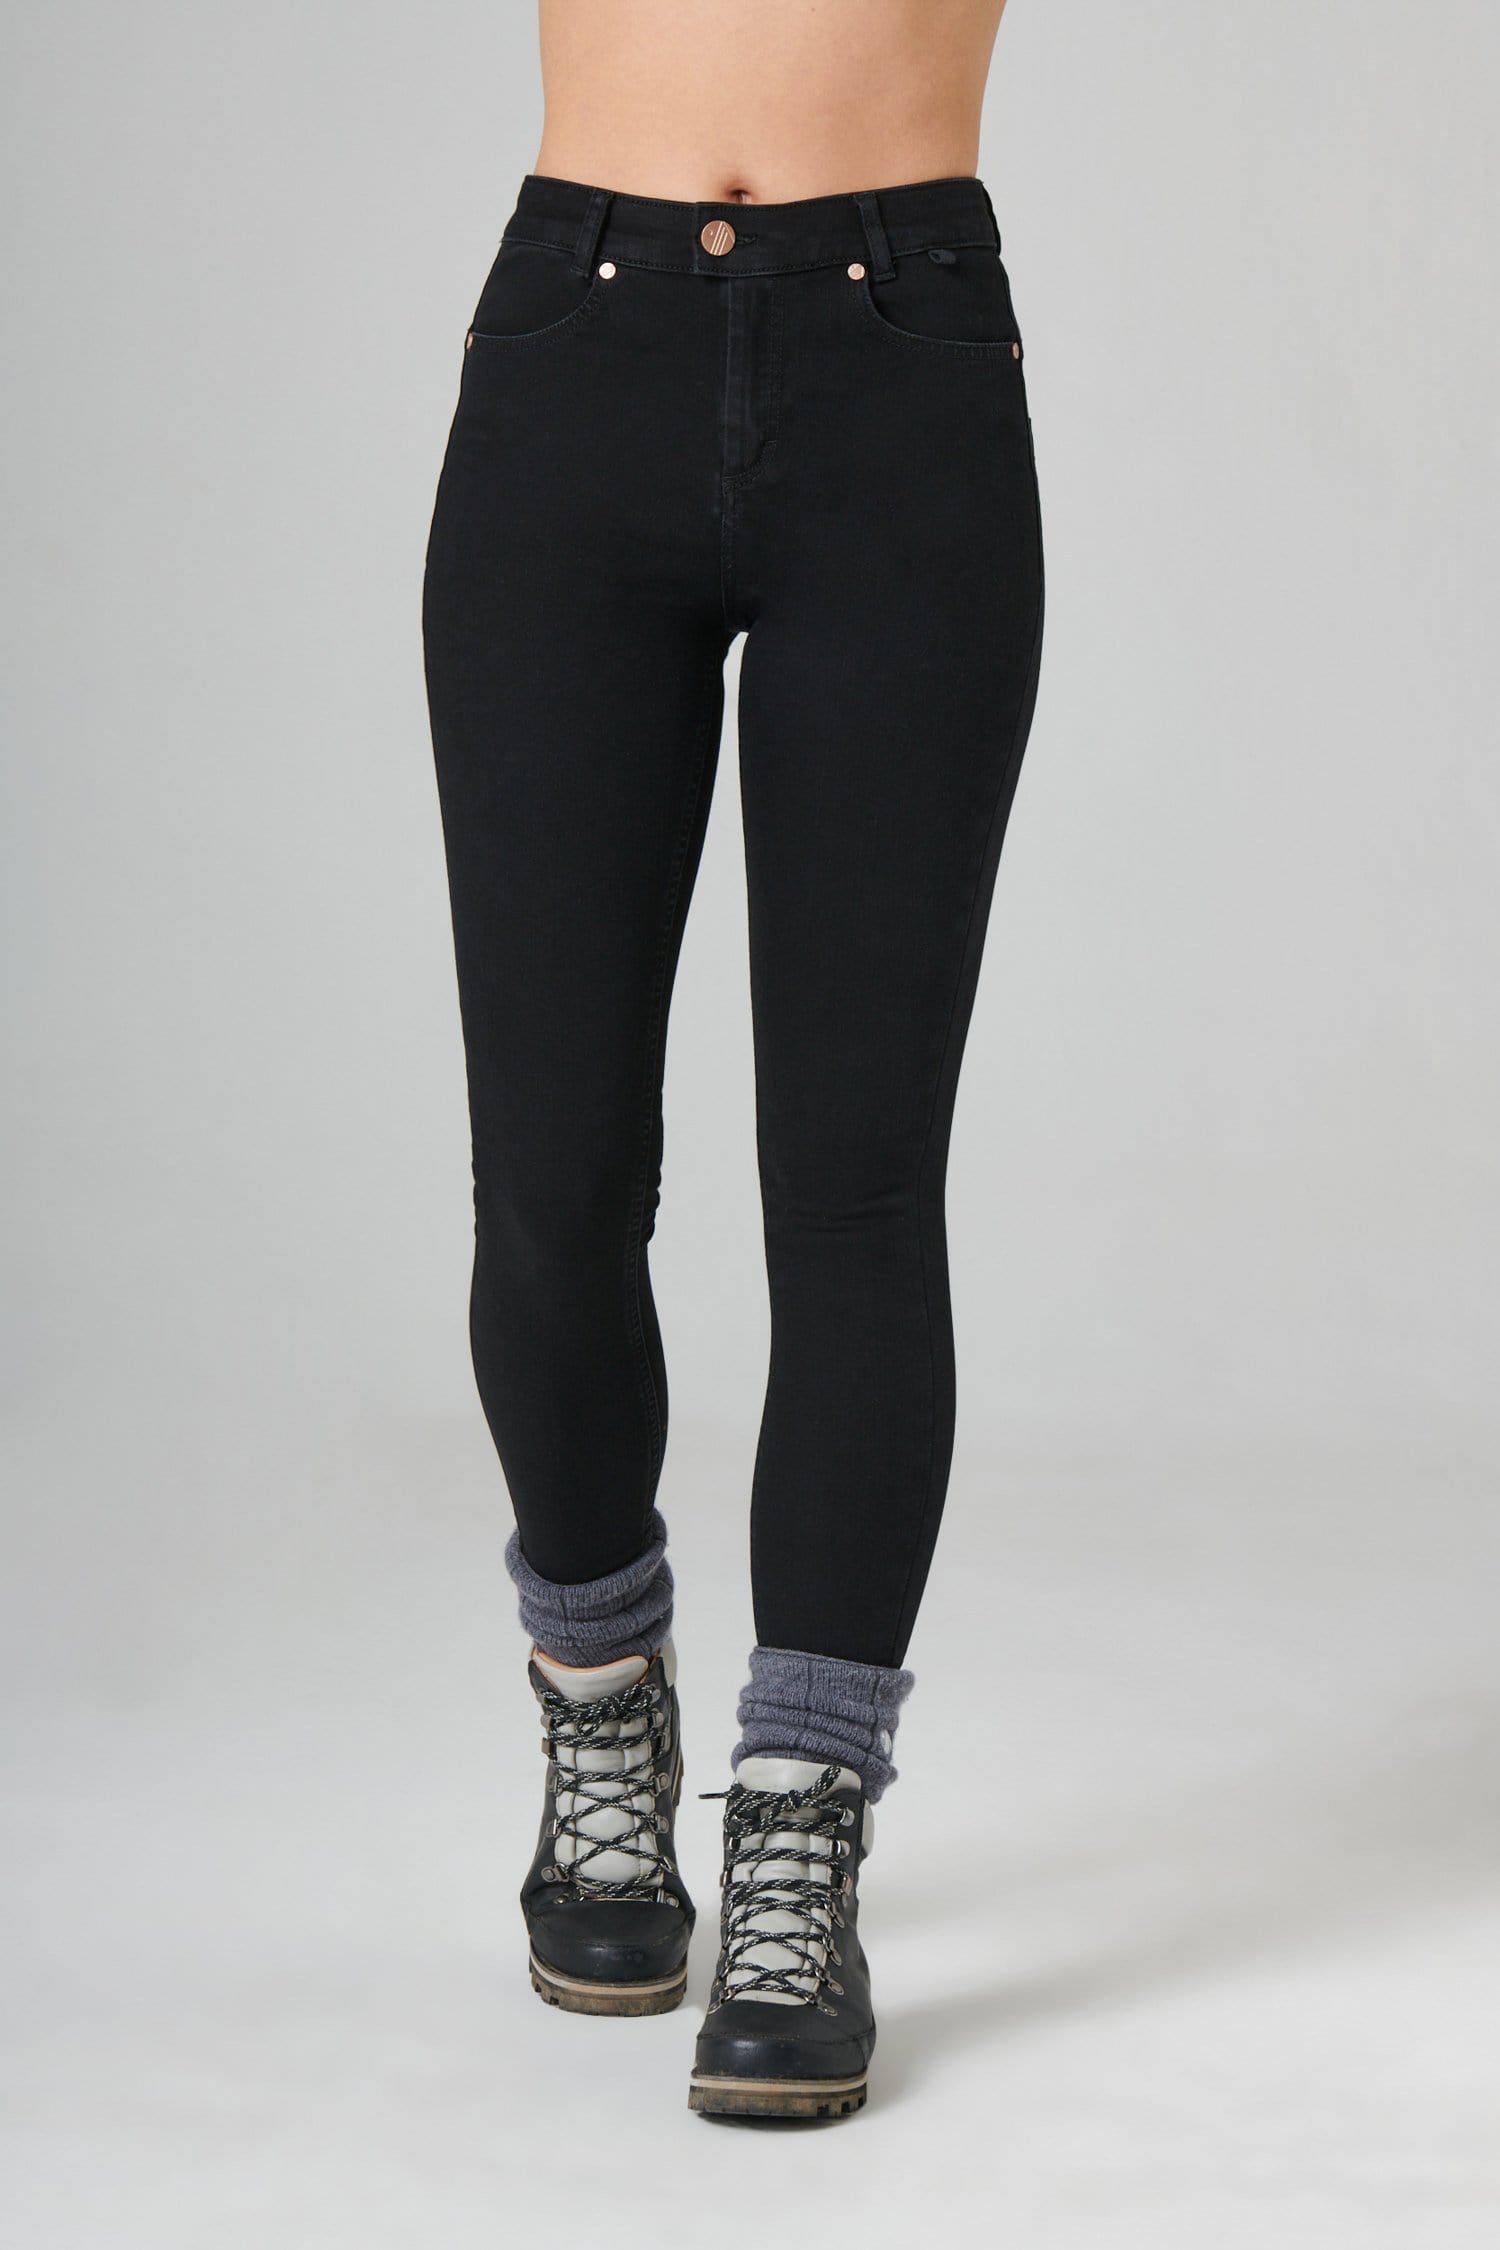 The Skinny Outdoor Jeans - Black Denim - 26r / Uk8 - Womens - Acai Outdoorwear